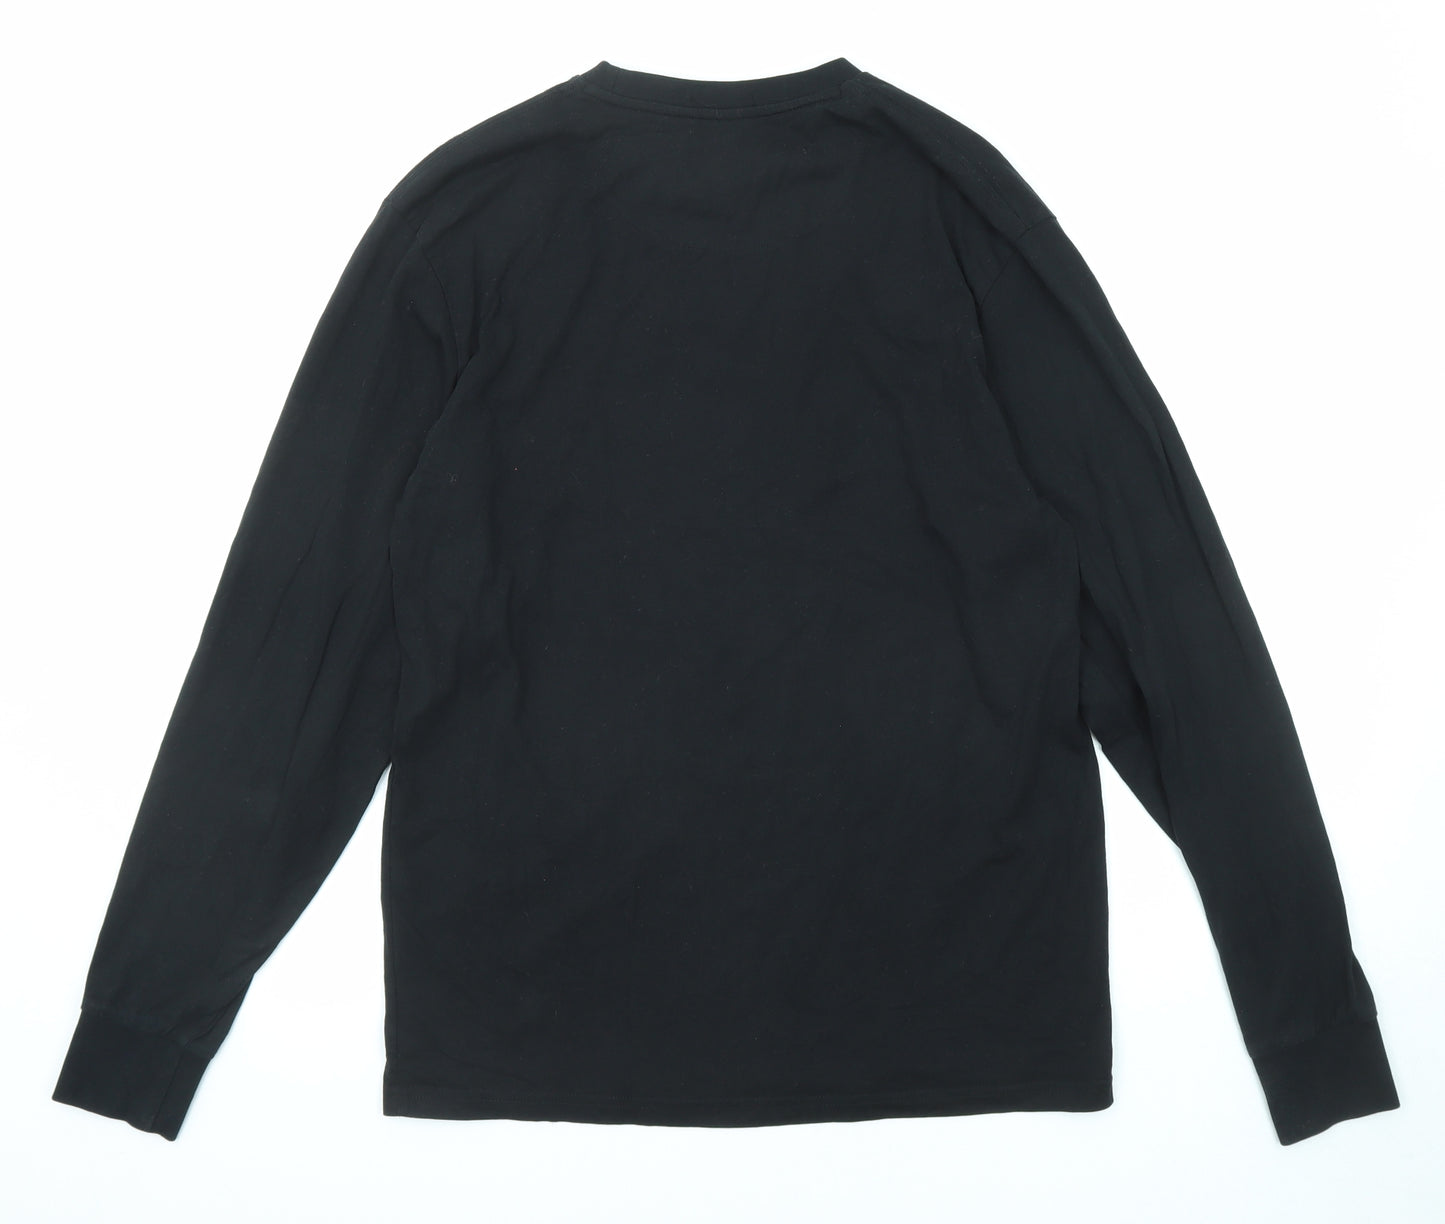 Weekend Offender Mens Black Cotton Pullover Sweatshirt Size M